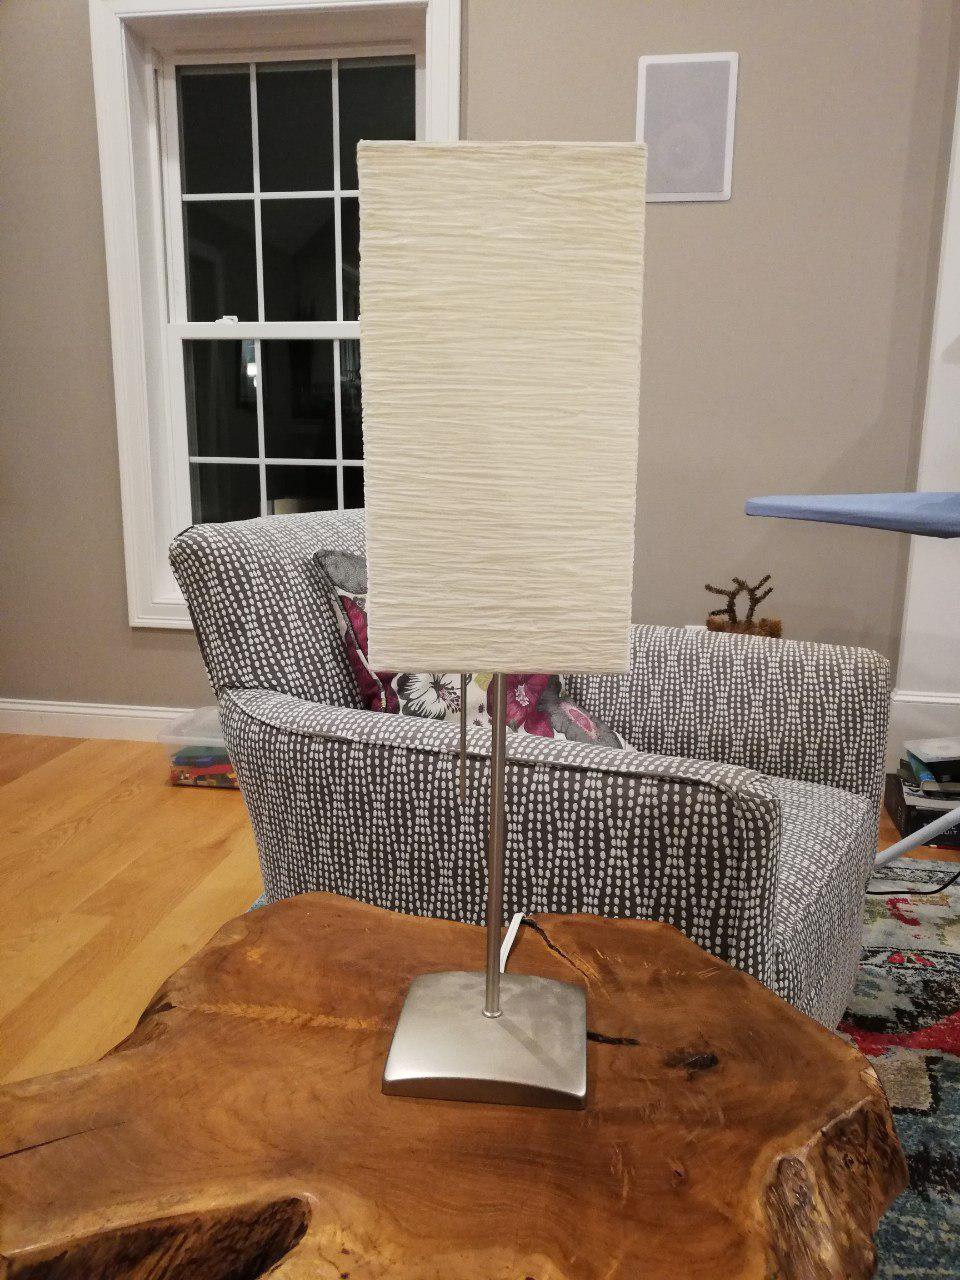 The original Ikea Lamp.